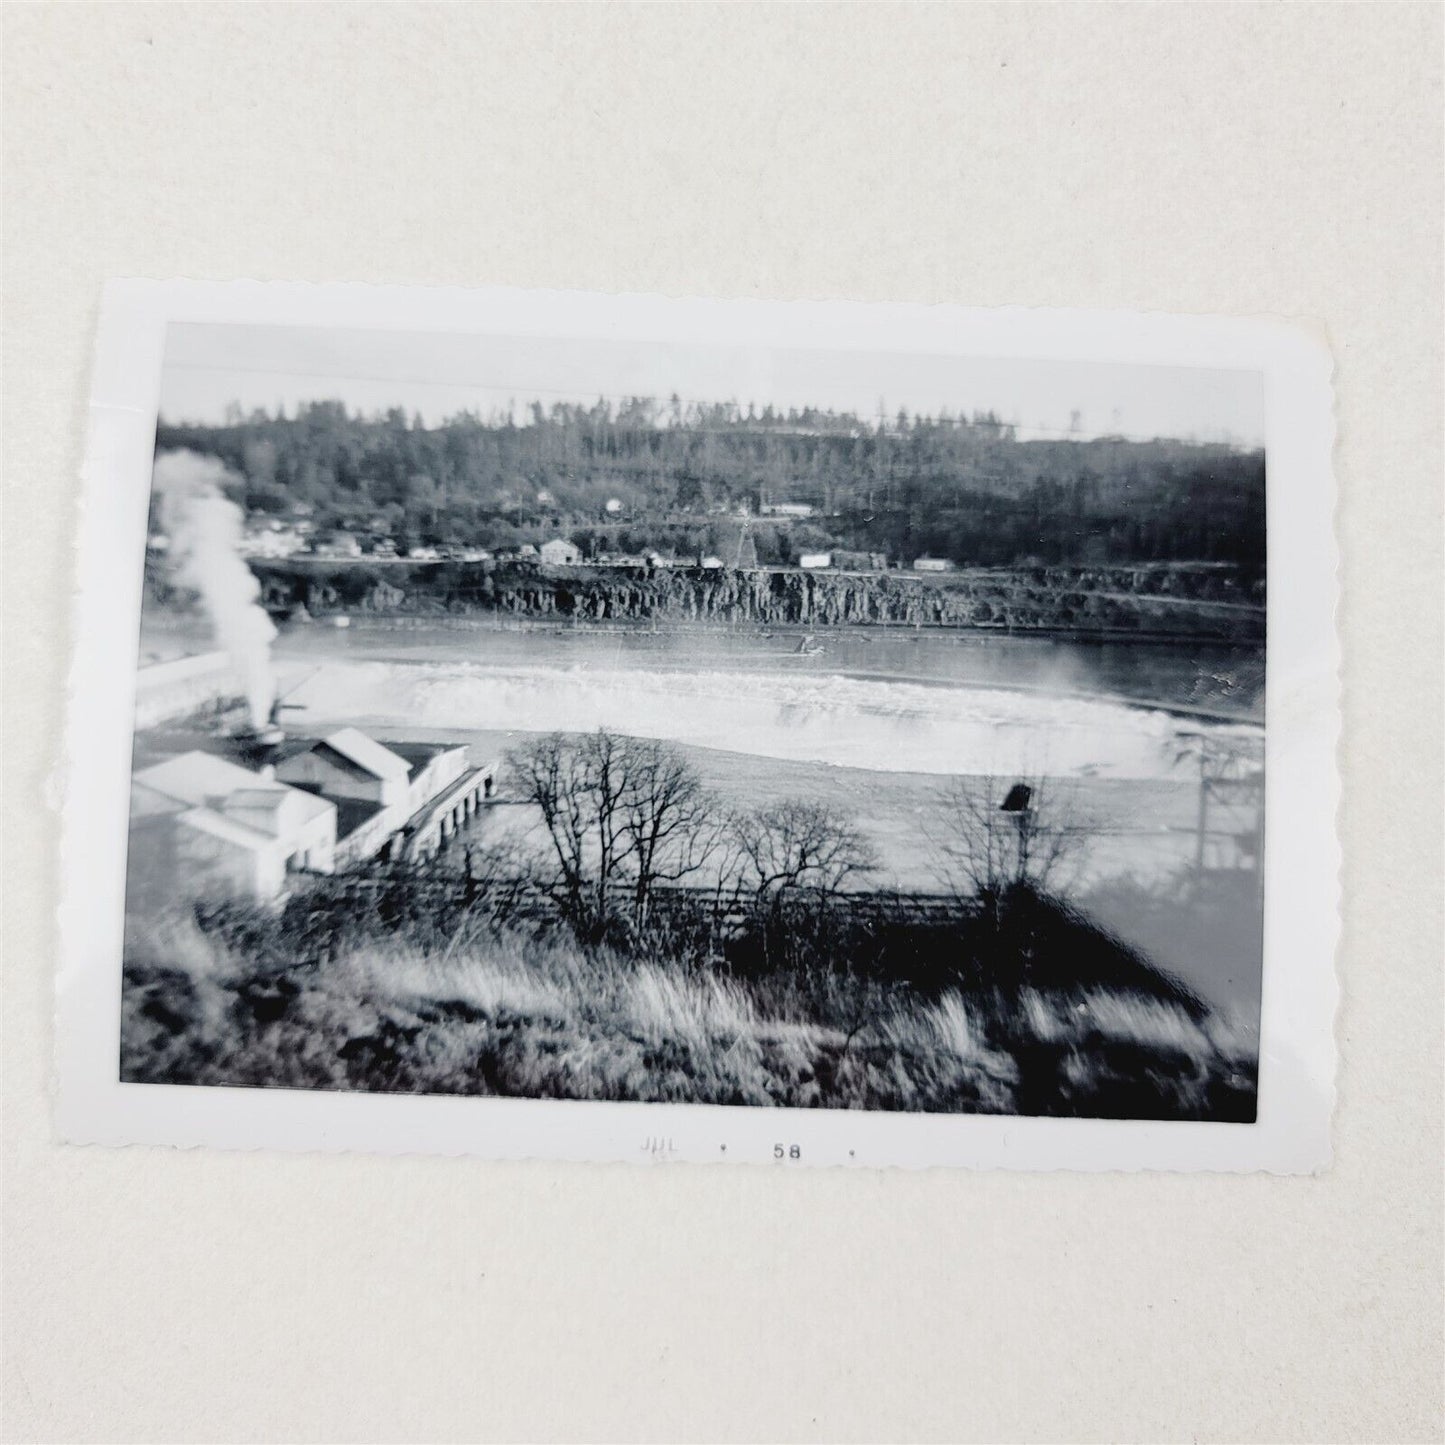 4 Vintage Photos 1964 Willamette Falls Oregon Flood Photography Lot Snapshots